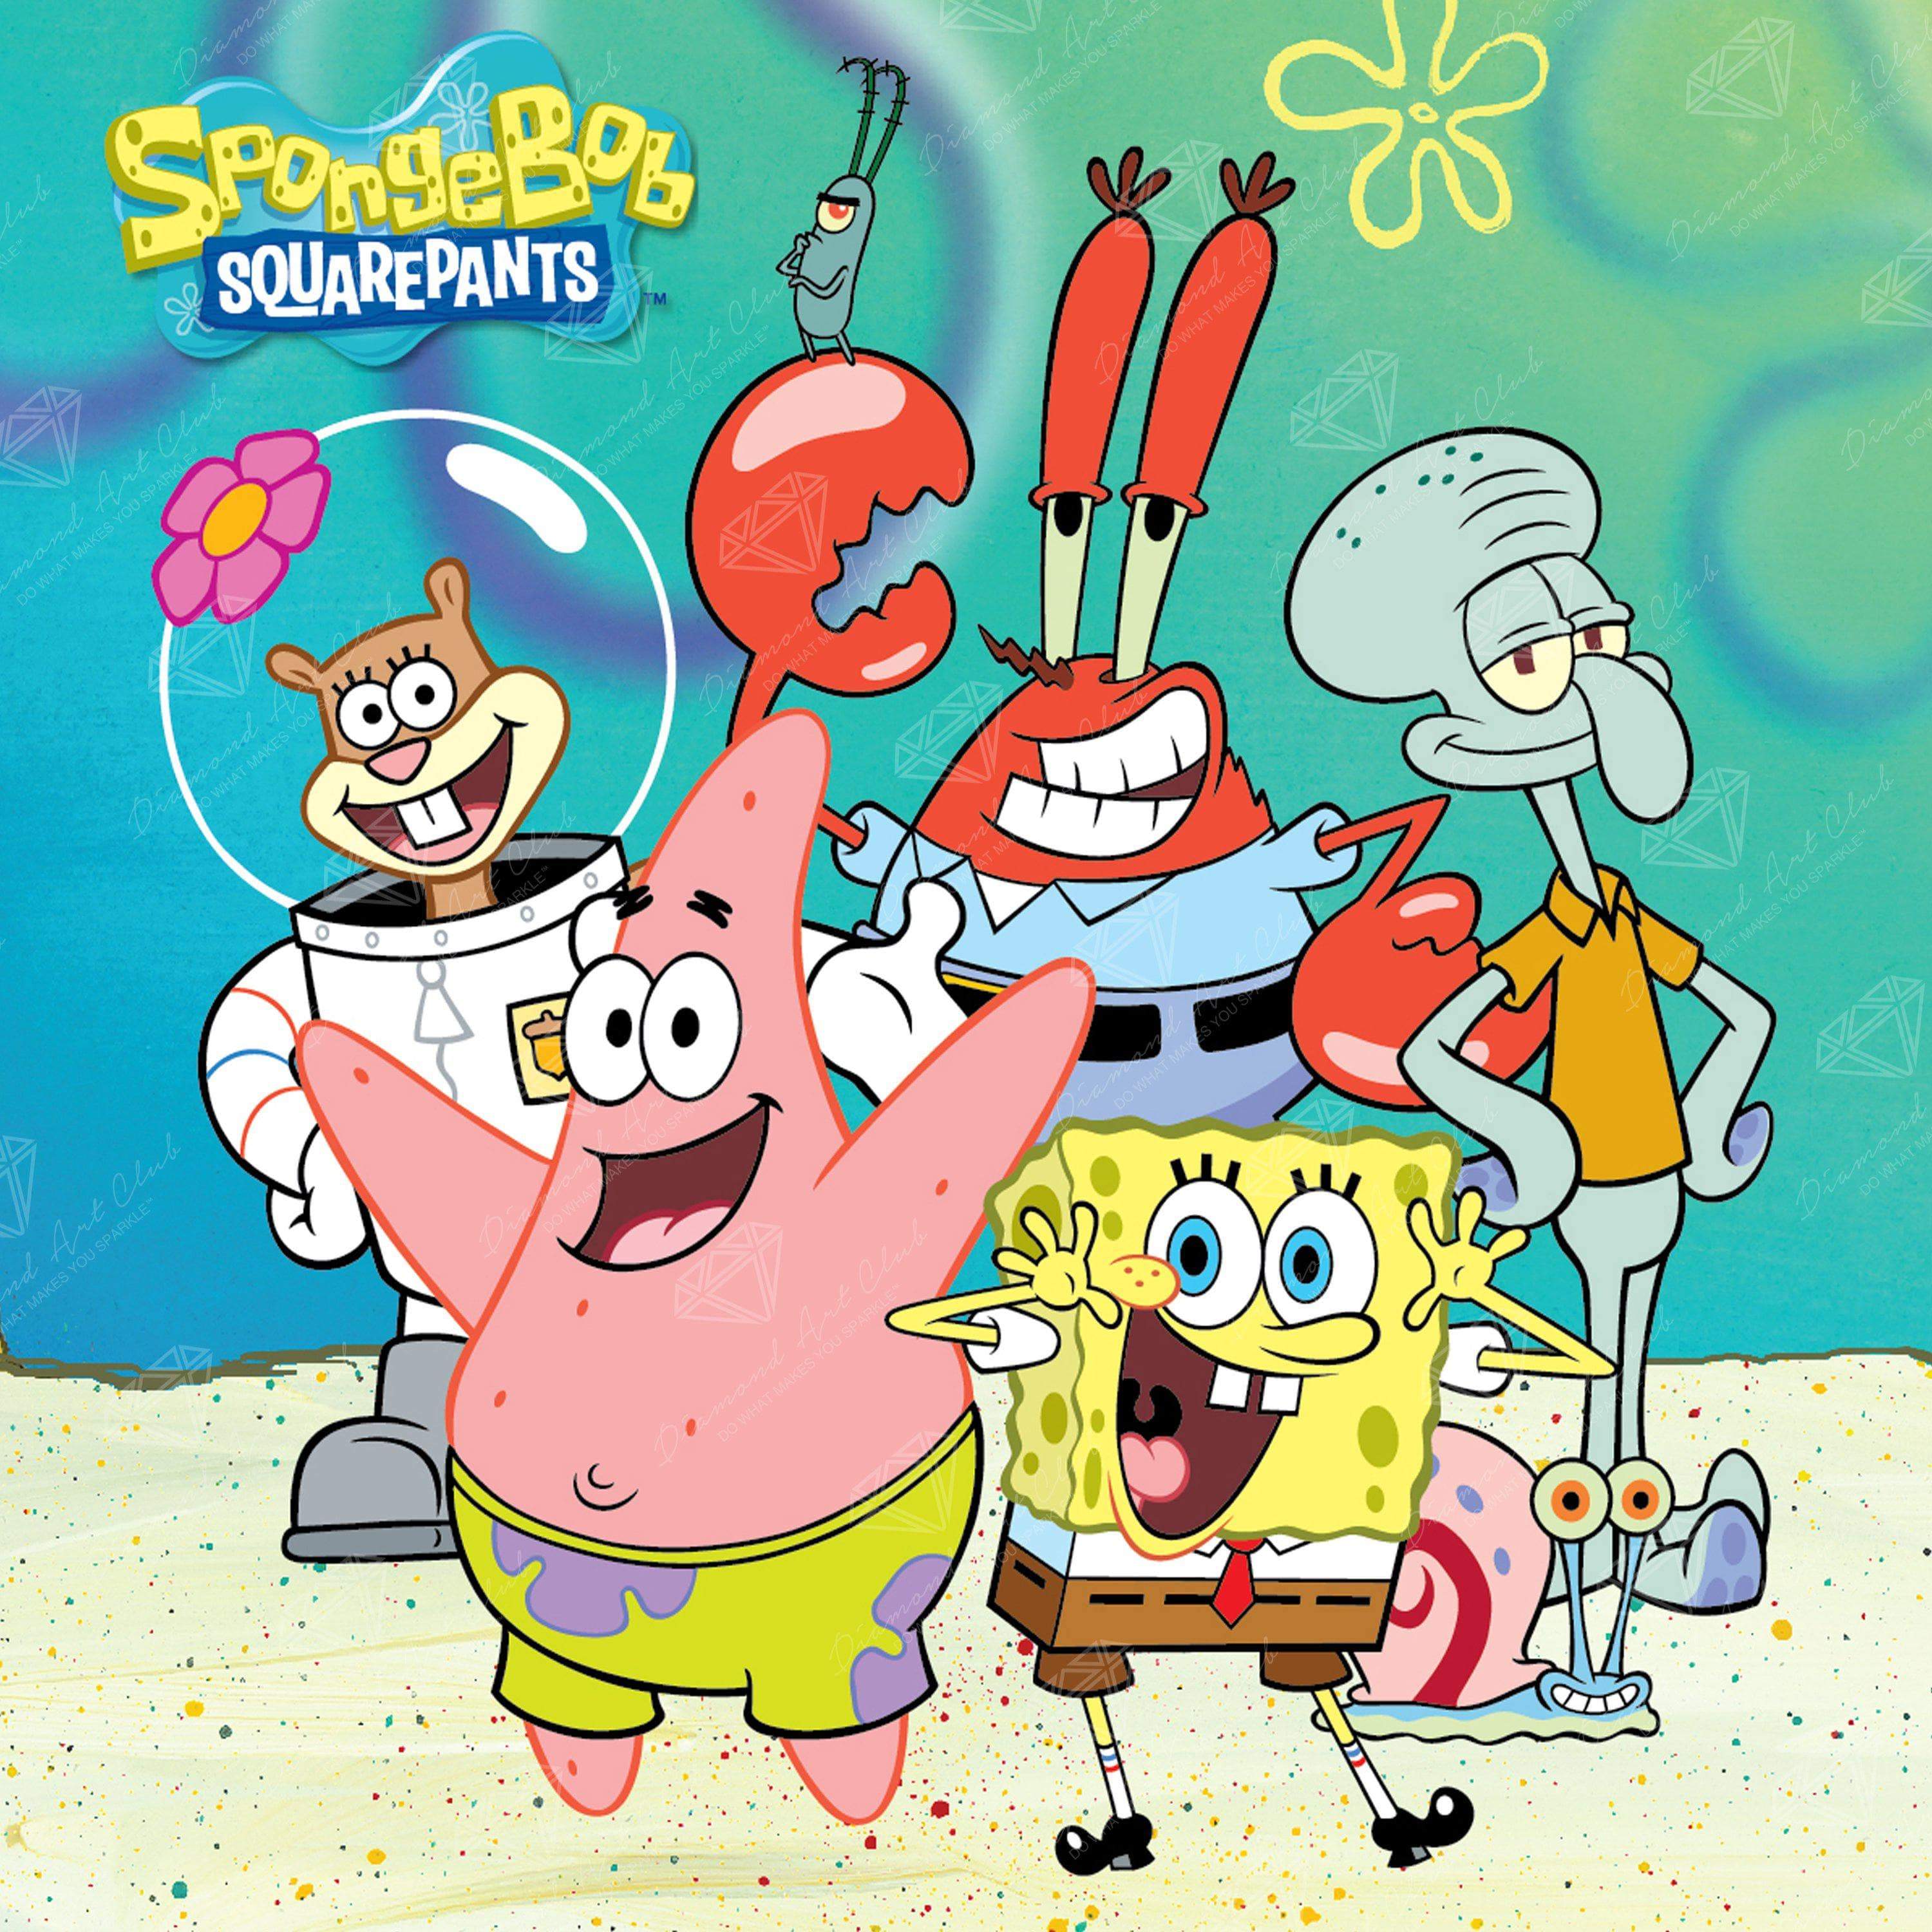 spongebob friends